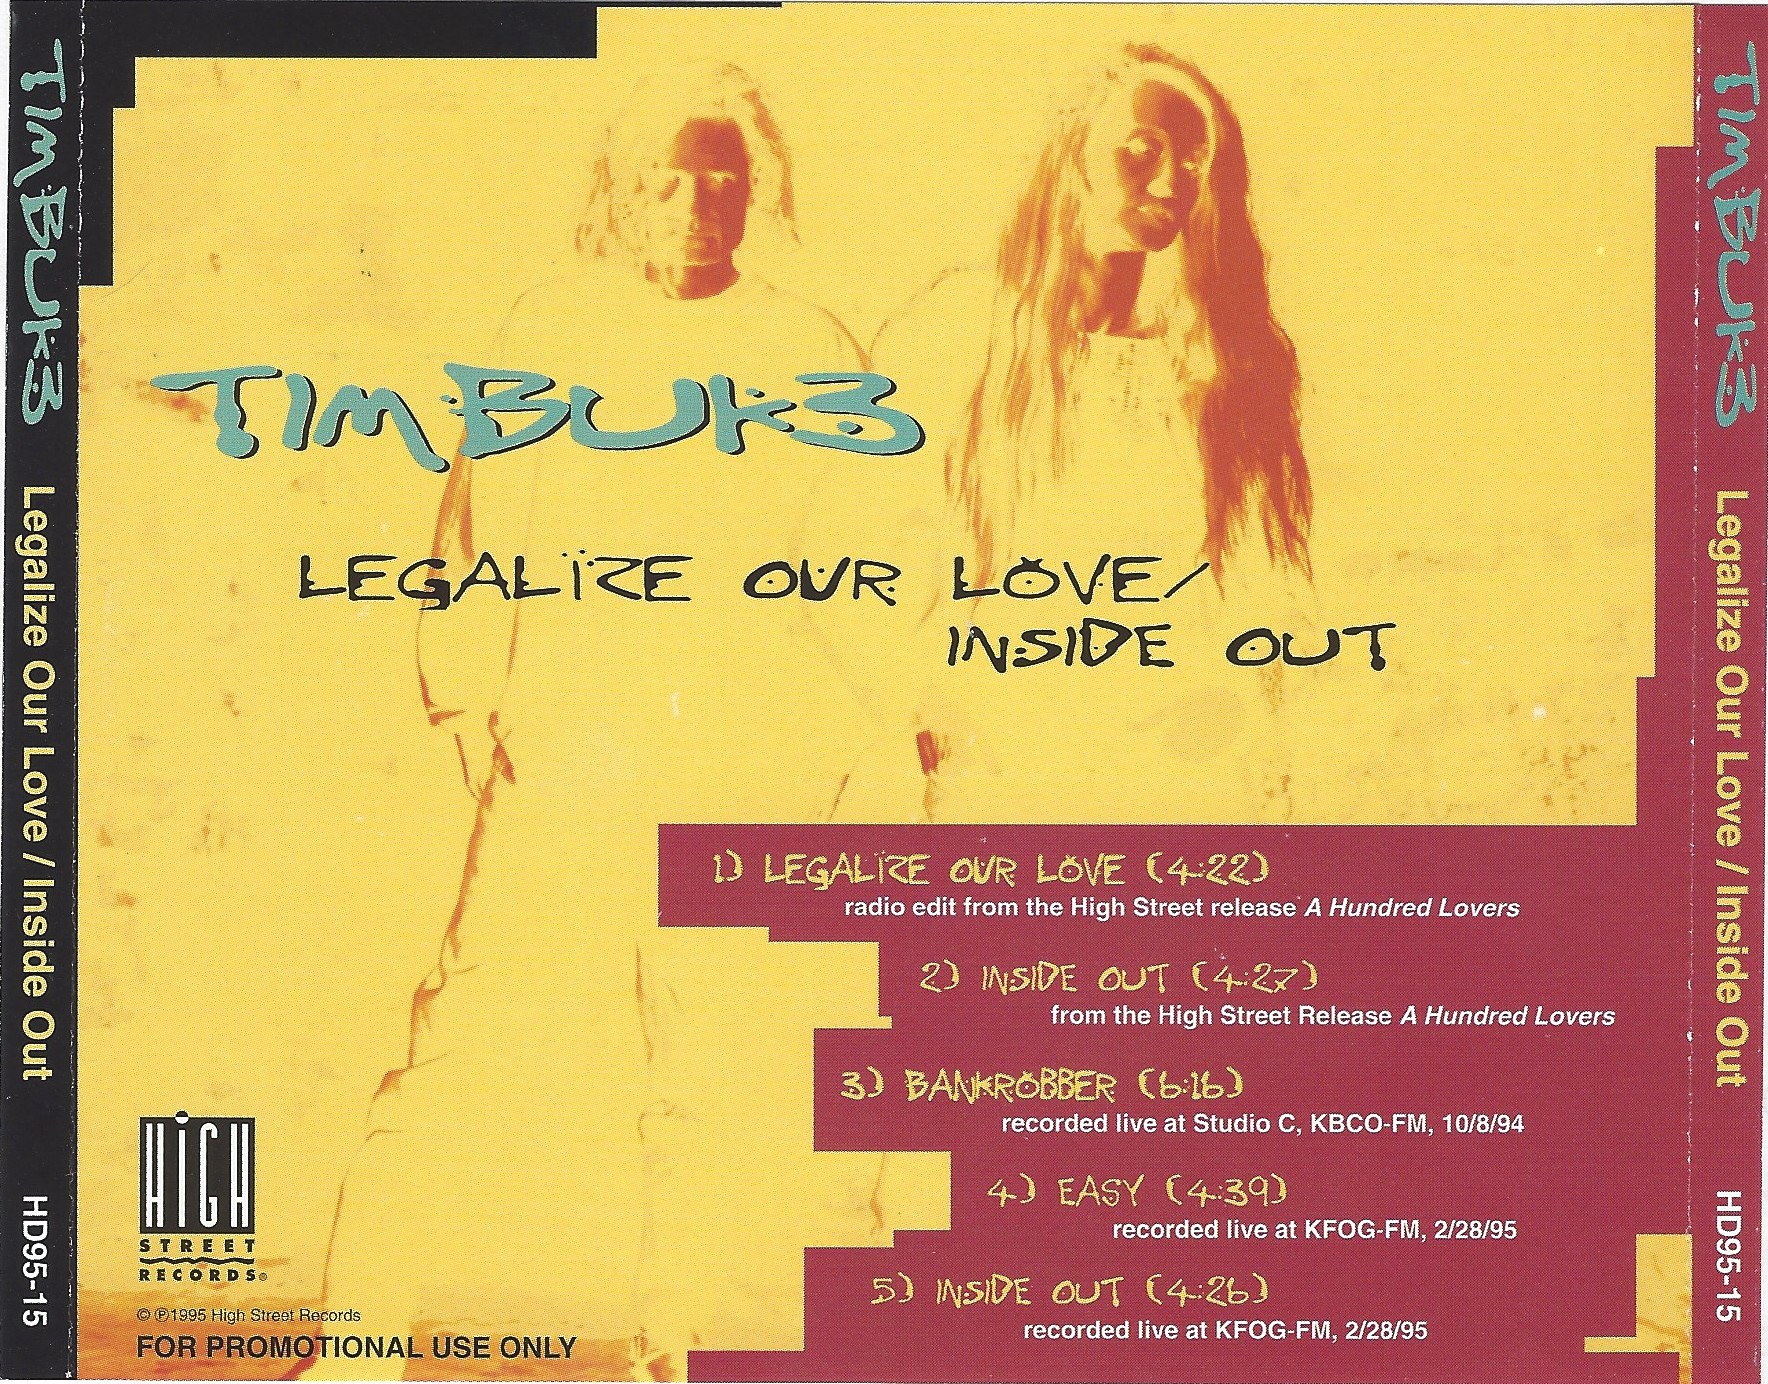 Timbuk3_1994-1995RadioSpots (1).jpg